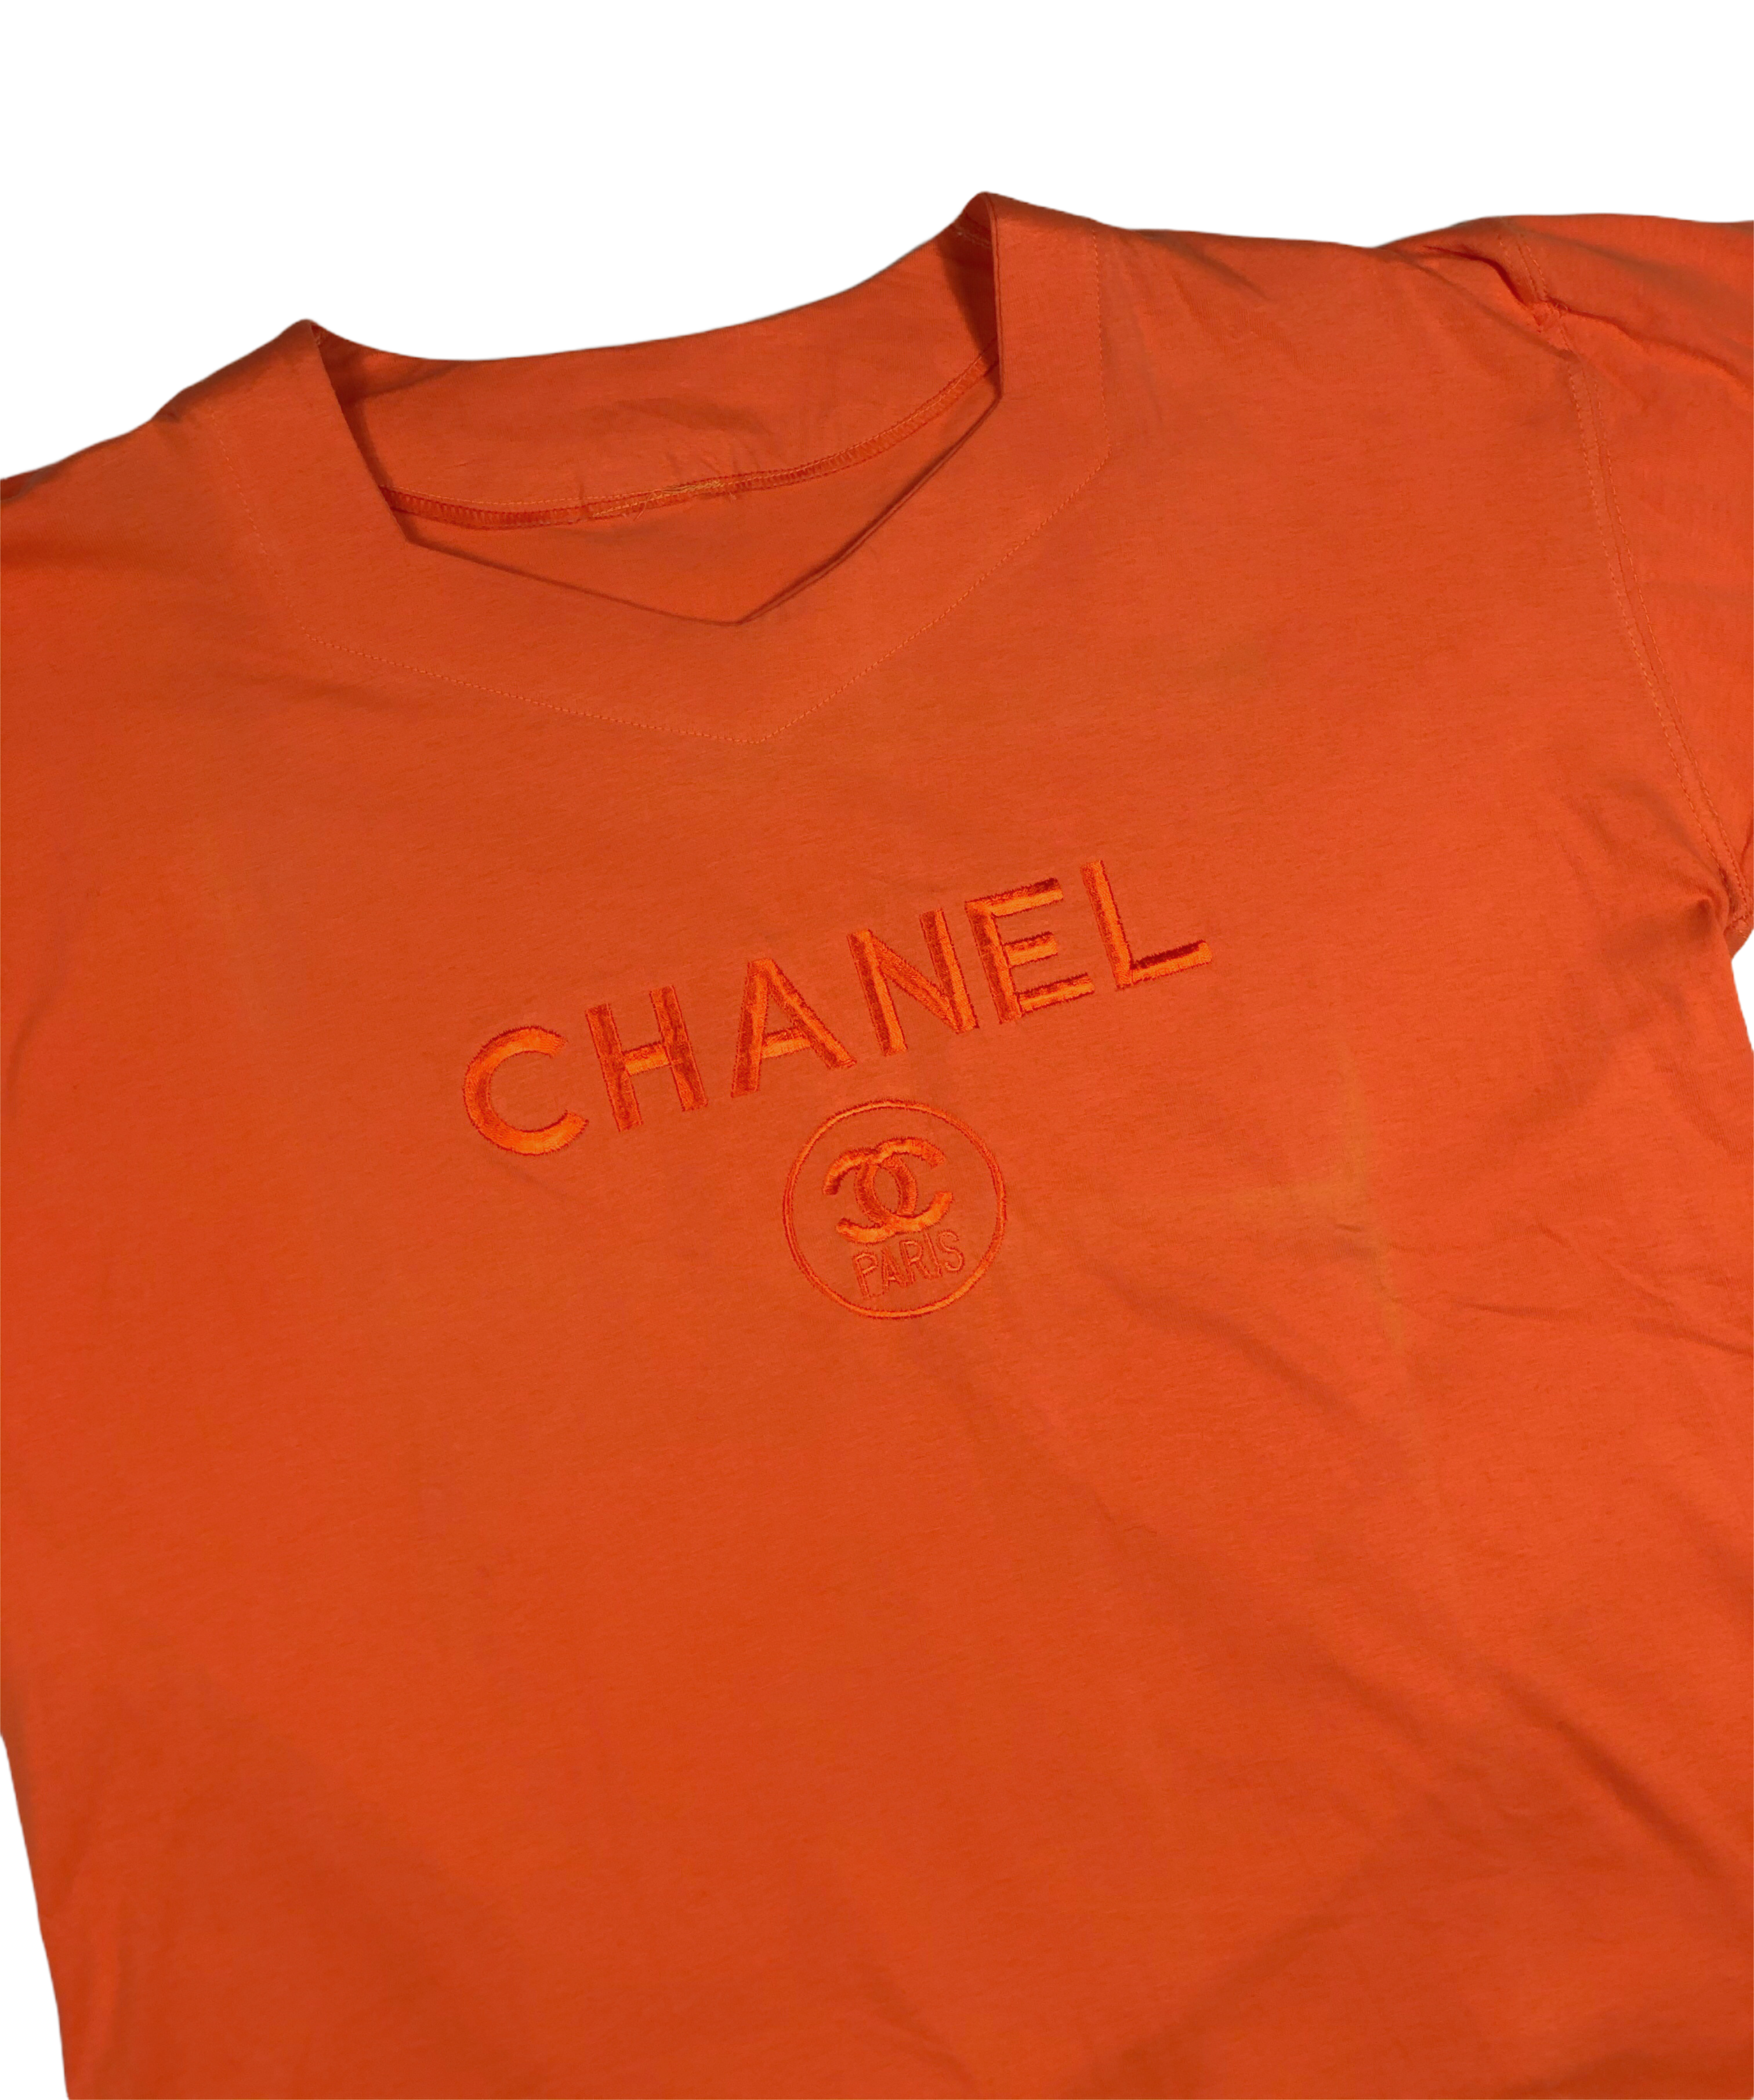 80's Chanel Paris Vintage Soft Thin Bootleg Designer T-Shirt